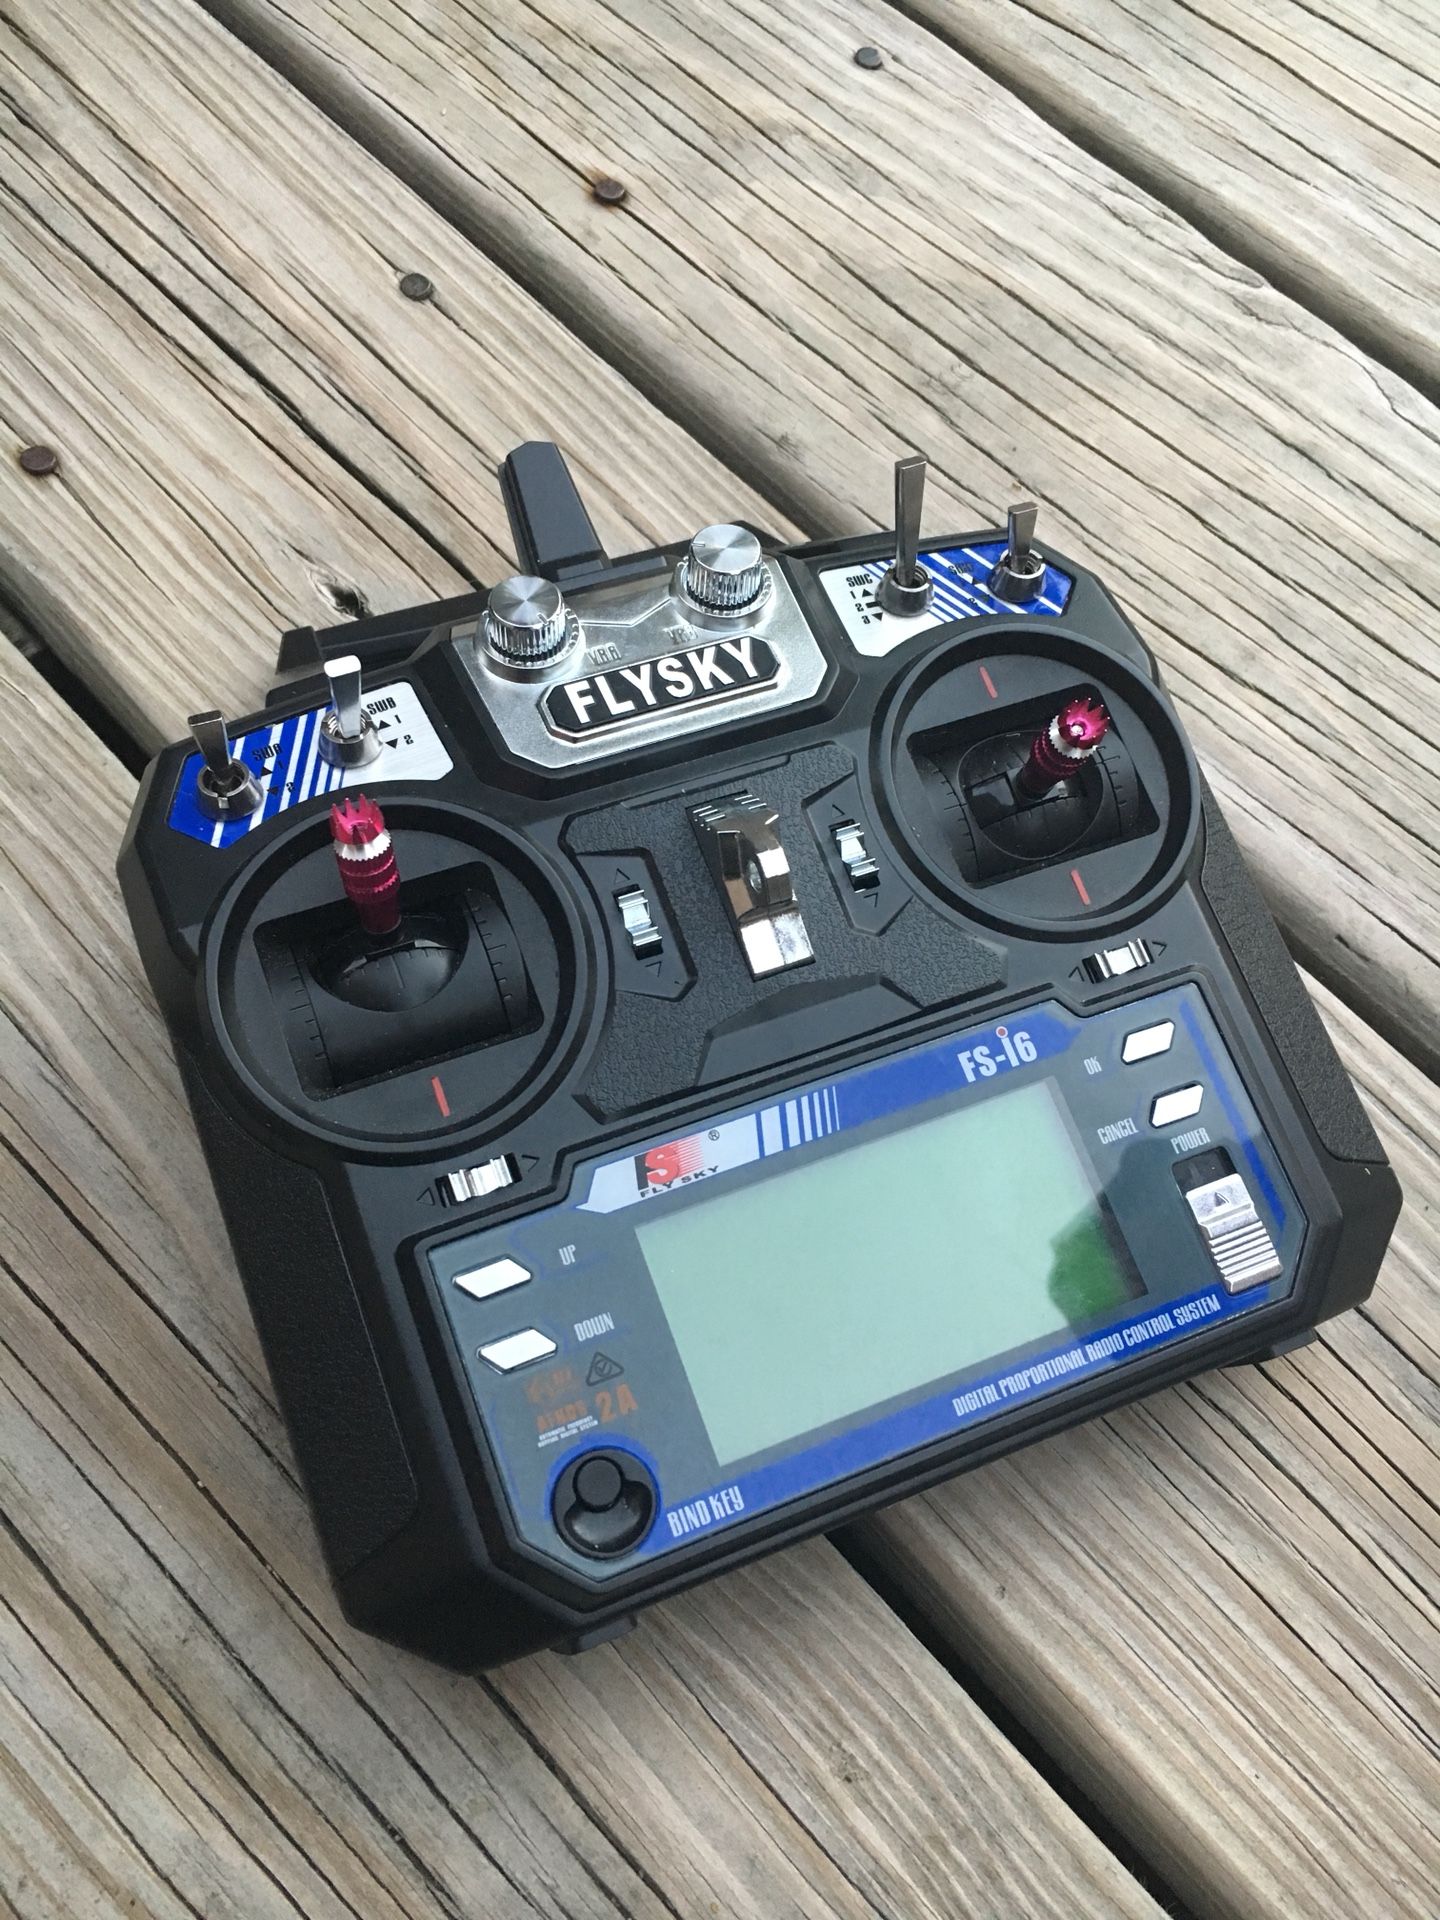 Flysky FS-i6 drone or plane remote